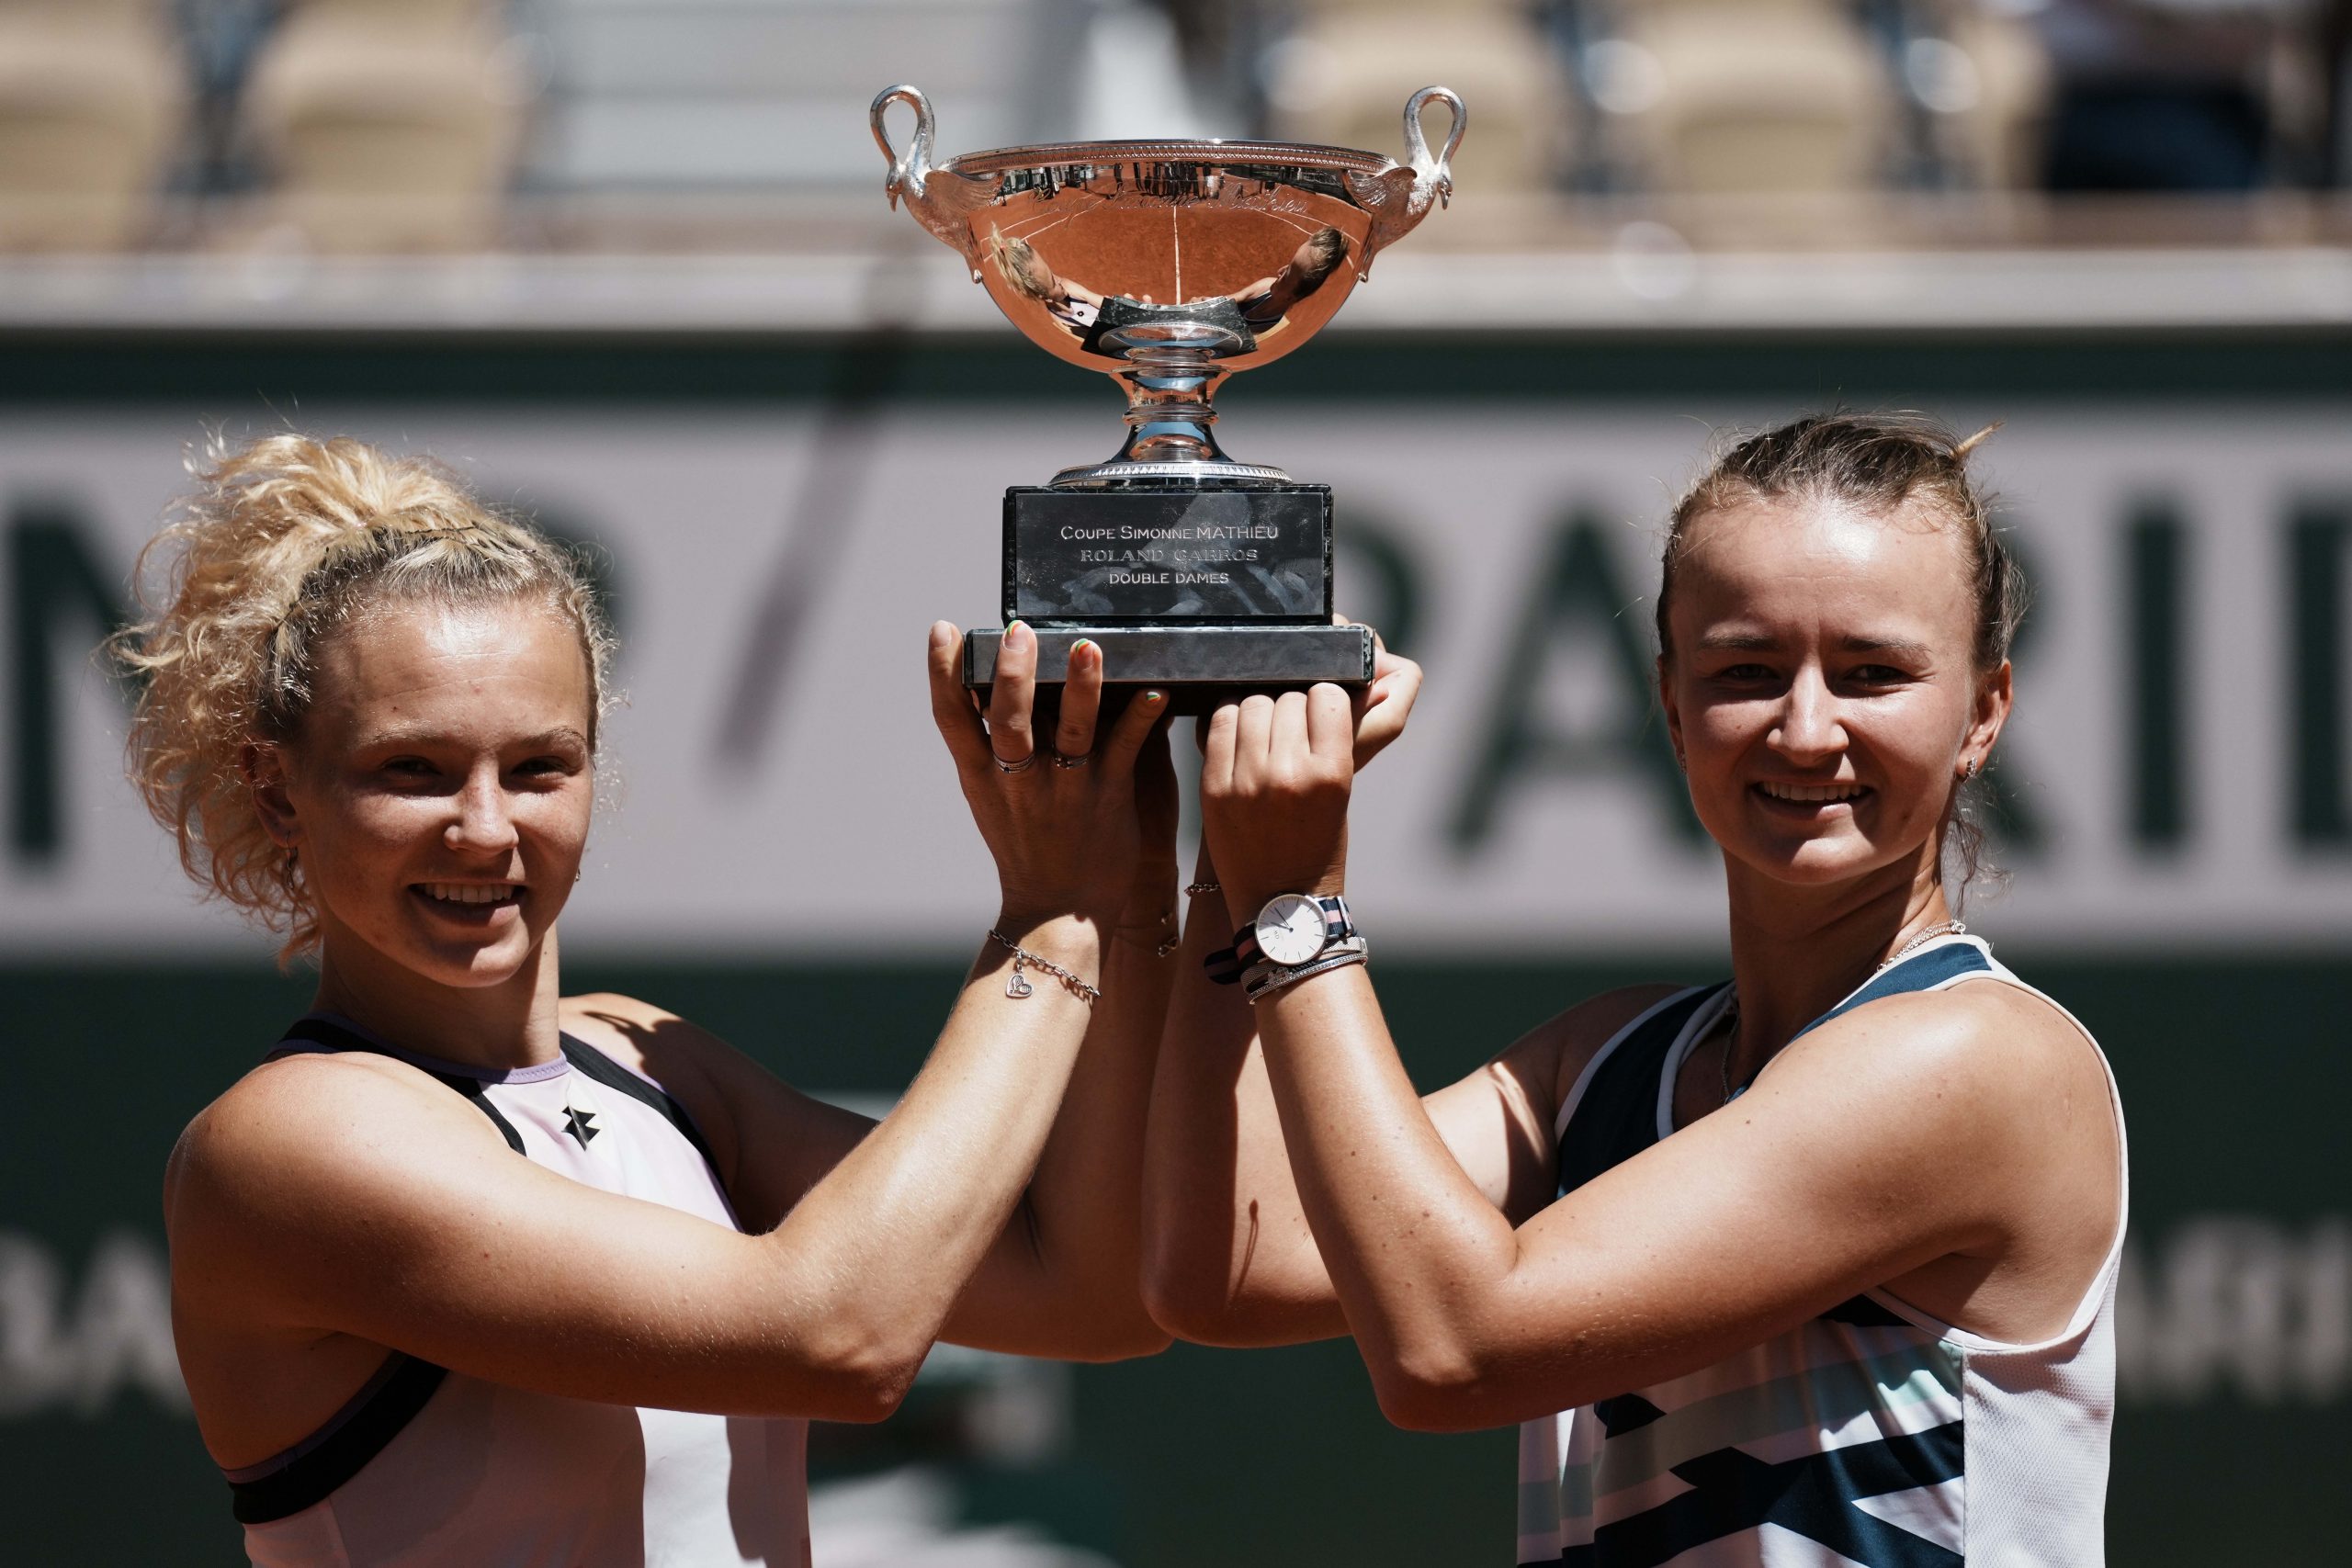 Australian Open 2022 women’s doubles finals: Krejcikova and Siniakova take on Danilina and Haddad Maia